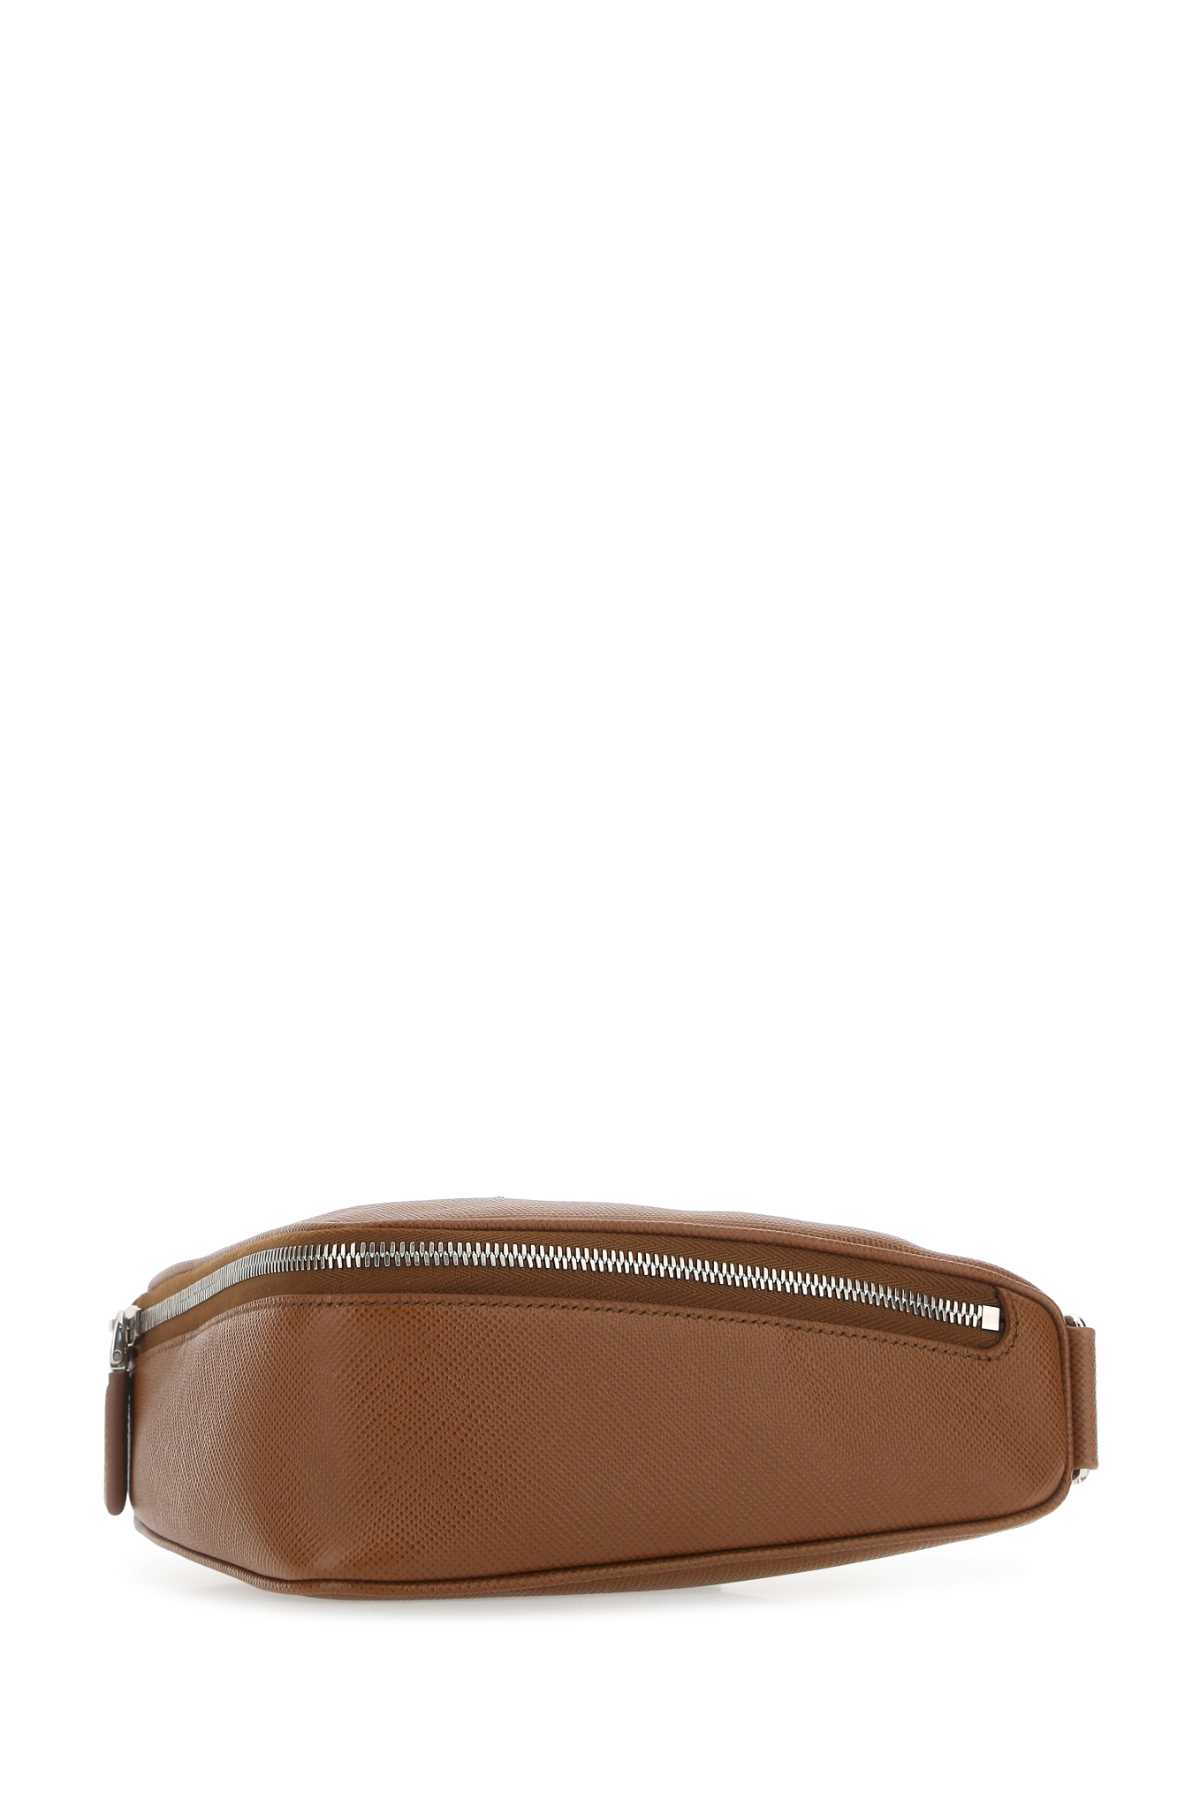 Shop Prada Brown Leather Belt Bag In F0046